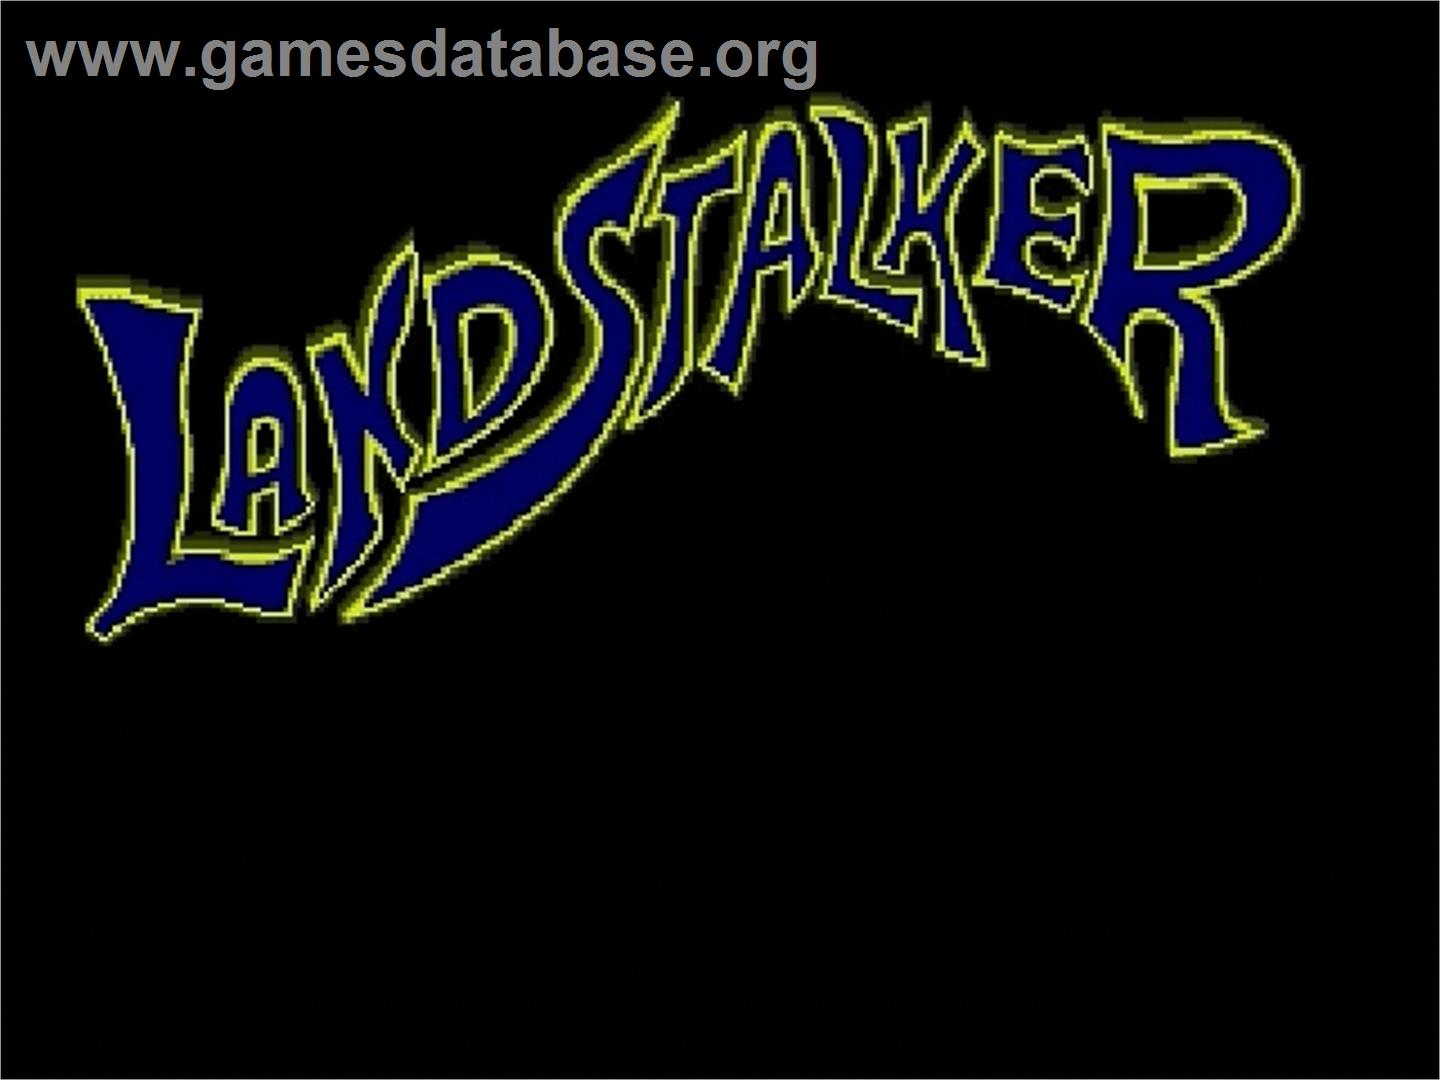 Landstalker: Treasure of King Nole - Sega Genesis - Artwork - Title Screen